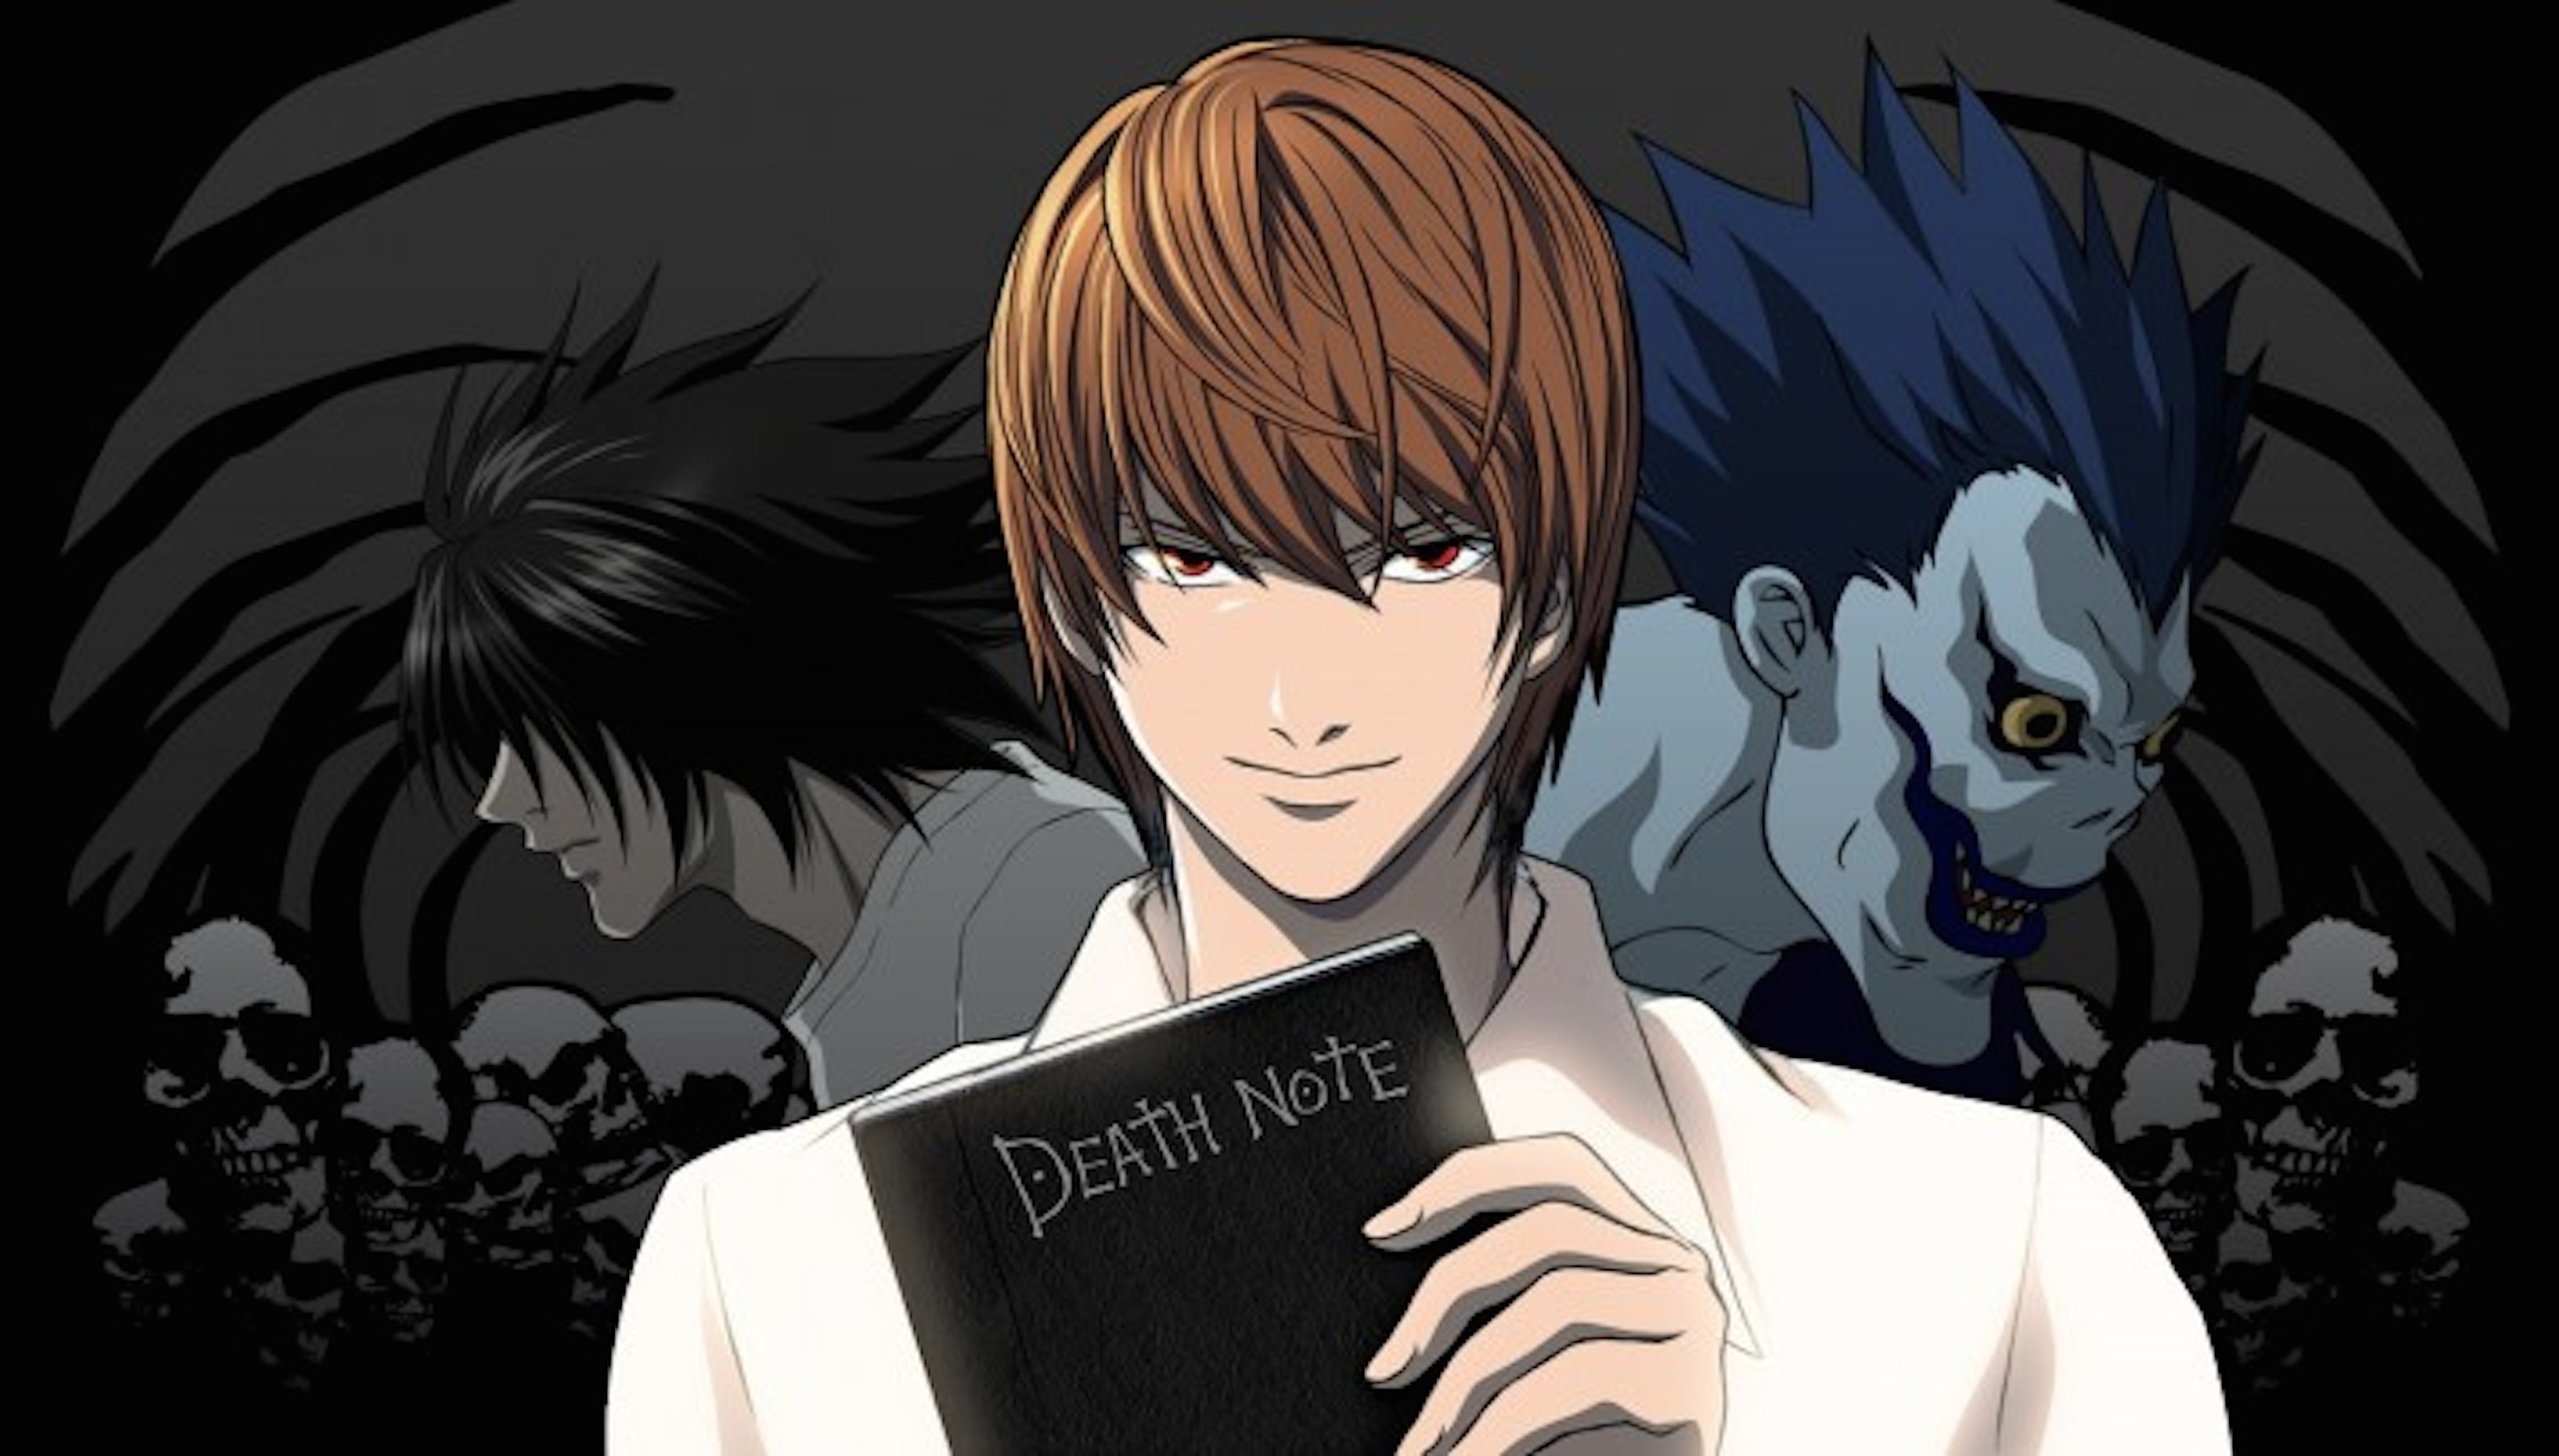 Anime Death Note Manga Series Background Wallpaper.